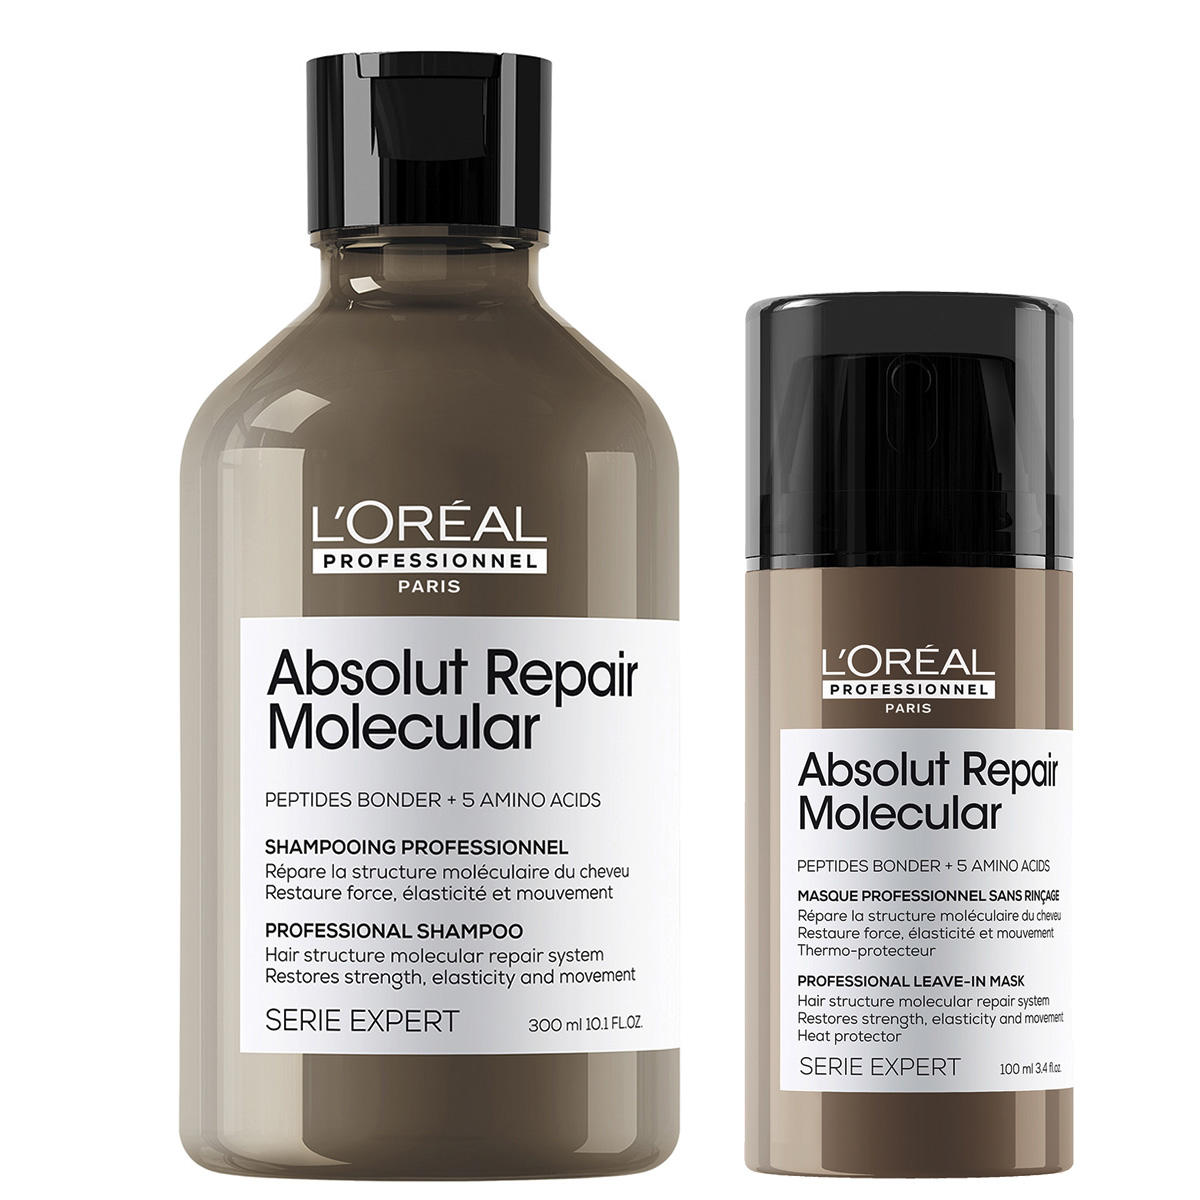 L'Oréal Professionnel Paris Serie Expert Absolut Repair Molecular Set 2 Shampoo + Leave in Mask  - 1